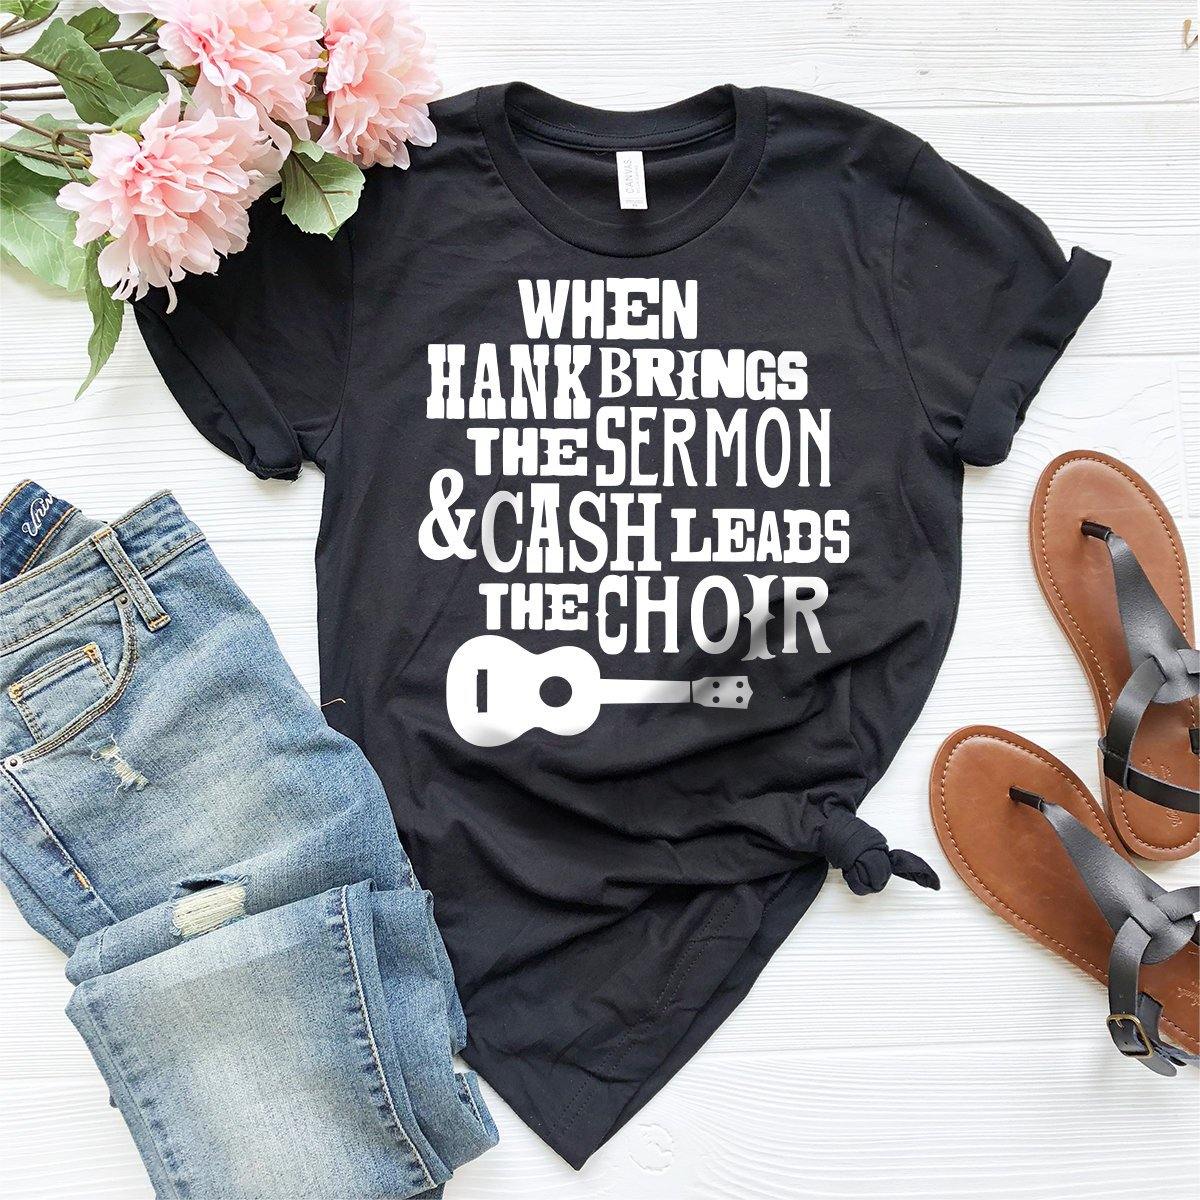 Country Shirt, Country Music Shirt, Western Shirt, Cowboy Shirt, Cow Girl Shirt, When Hank Brings The Serom And Cash Leads The Choir Shirt - Fastdeliverytees.com